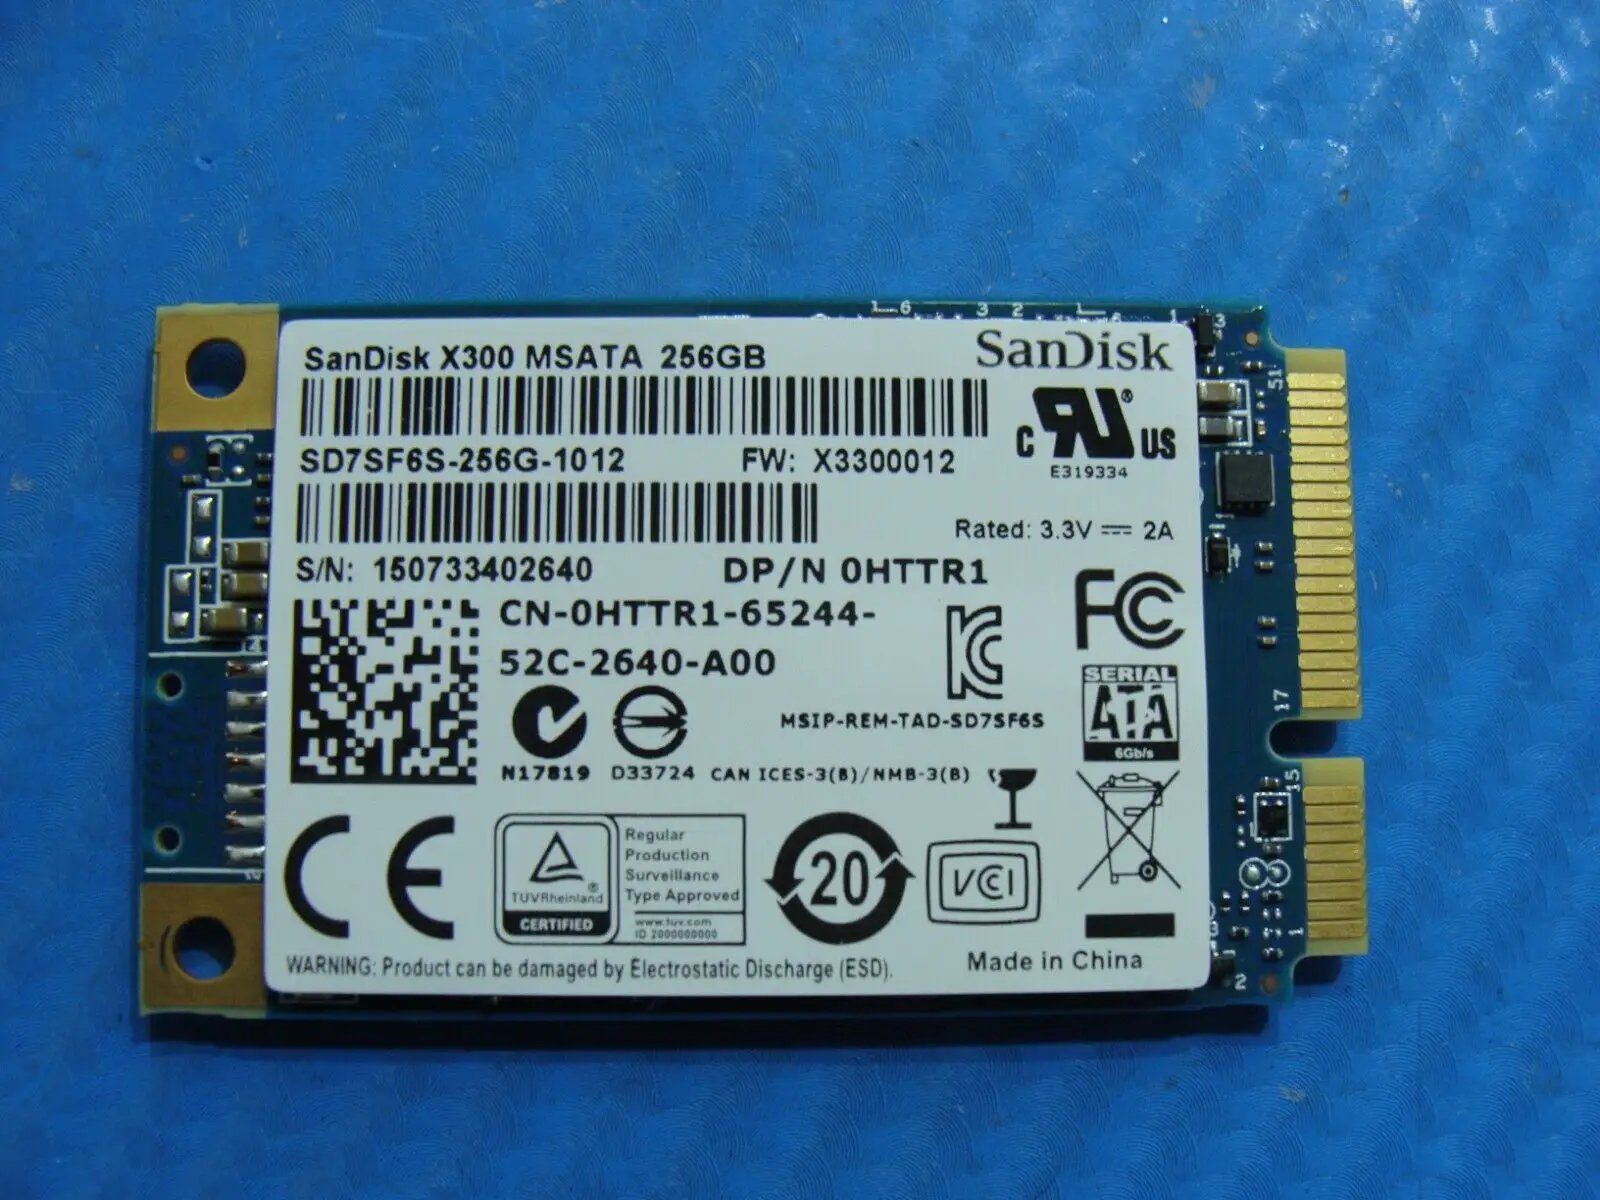 Dell E7450 SanDisk 256GB mSATA SSD Solid State Drive 0HTTR1 SD7SF6S-256G-1012